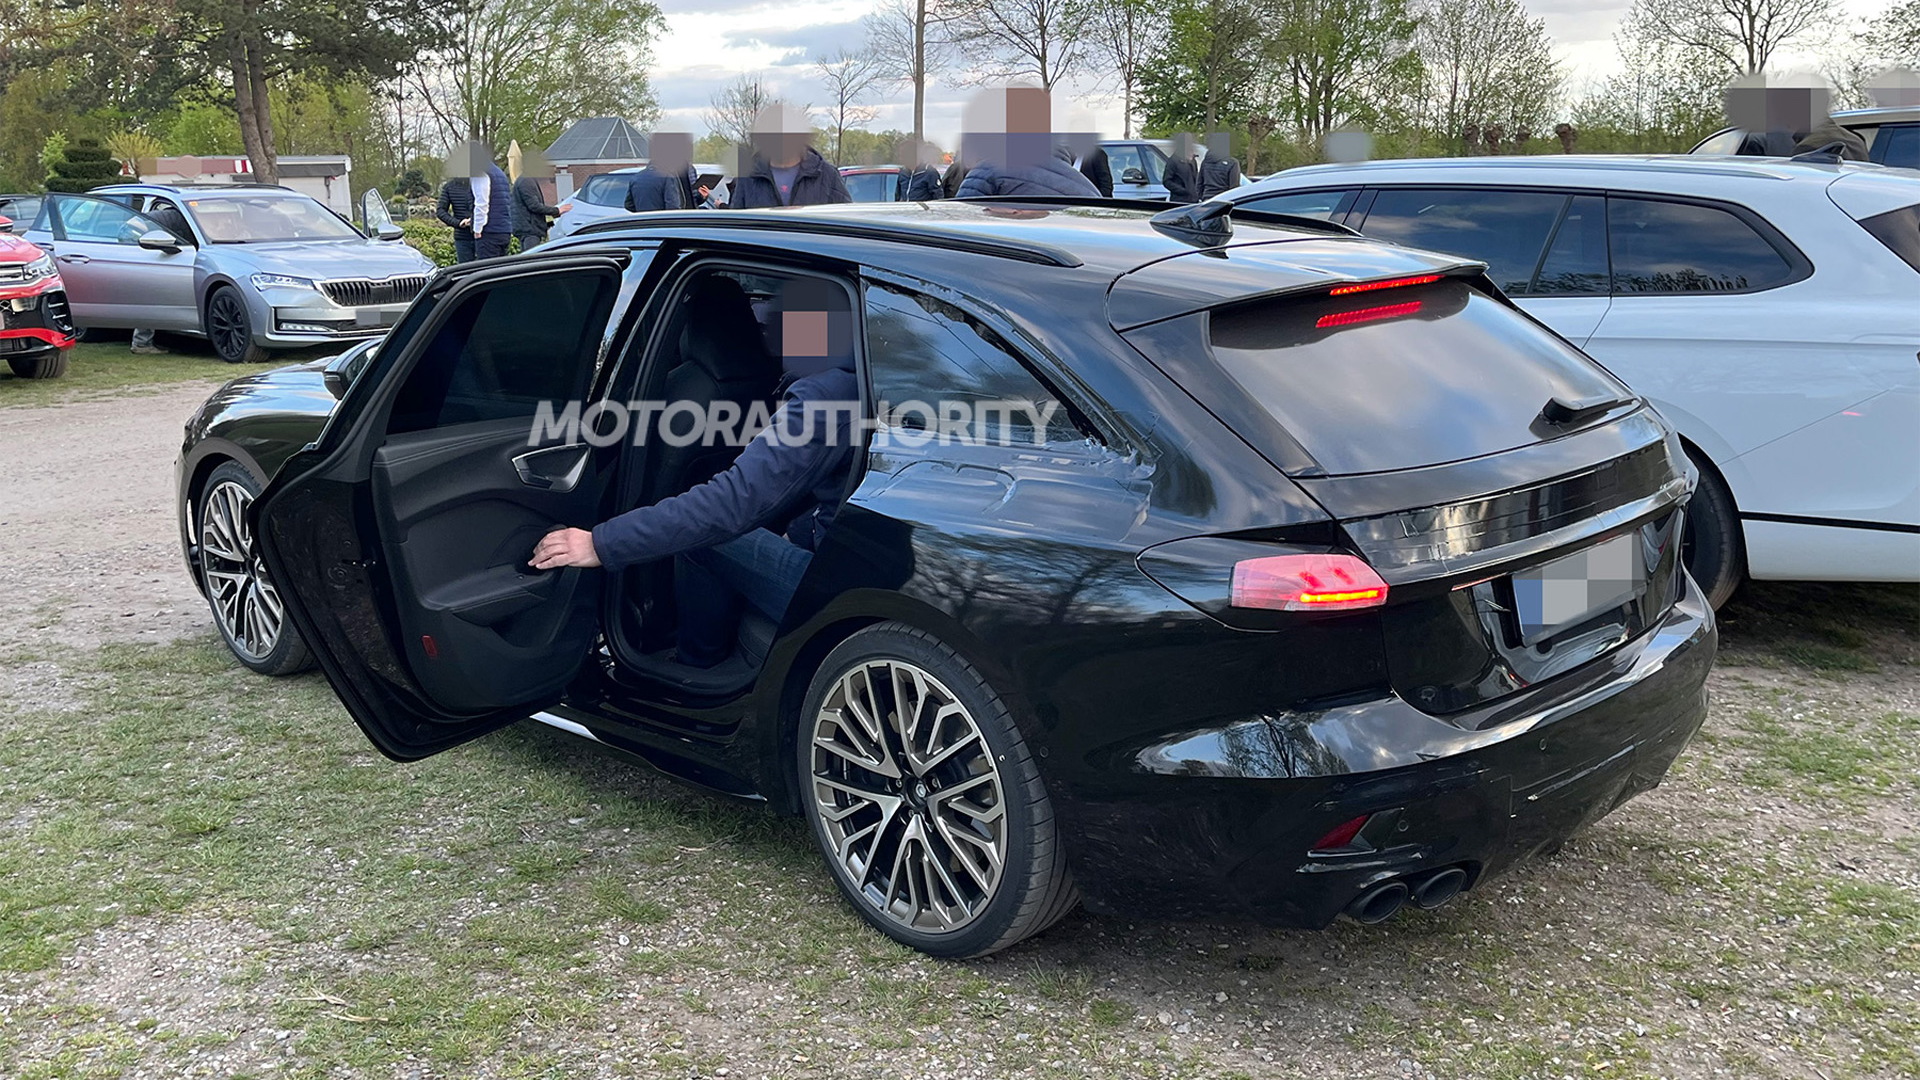 2025 Audi S5 Avant spy shots - Photo credit: Timo Jann/SB-Medien